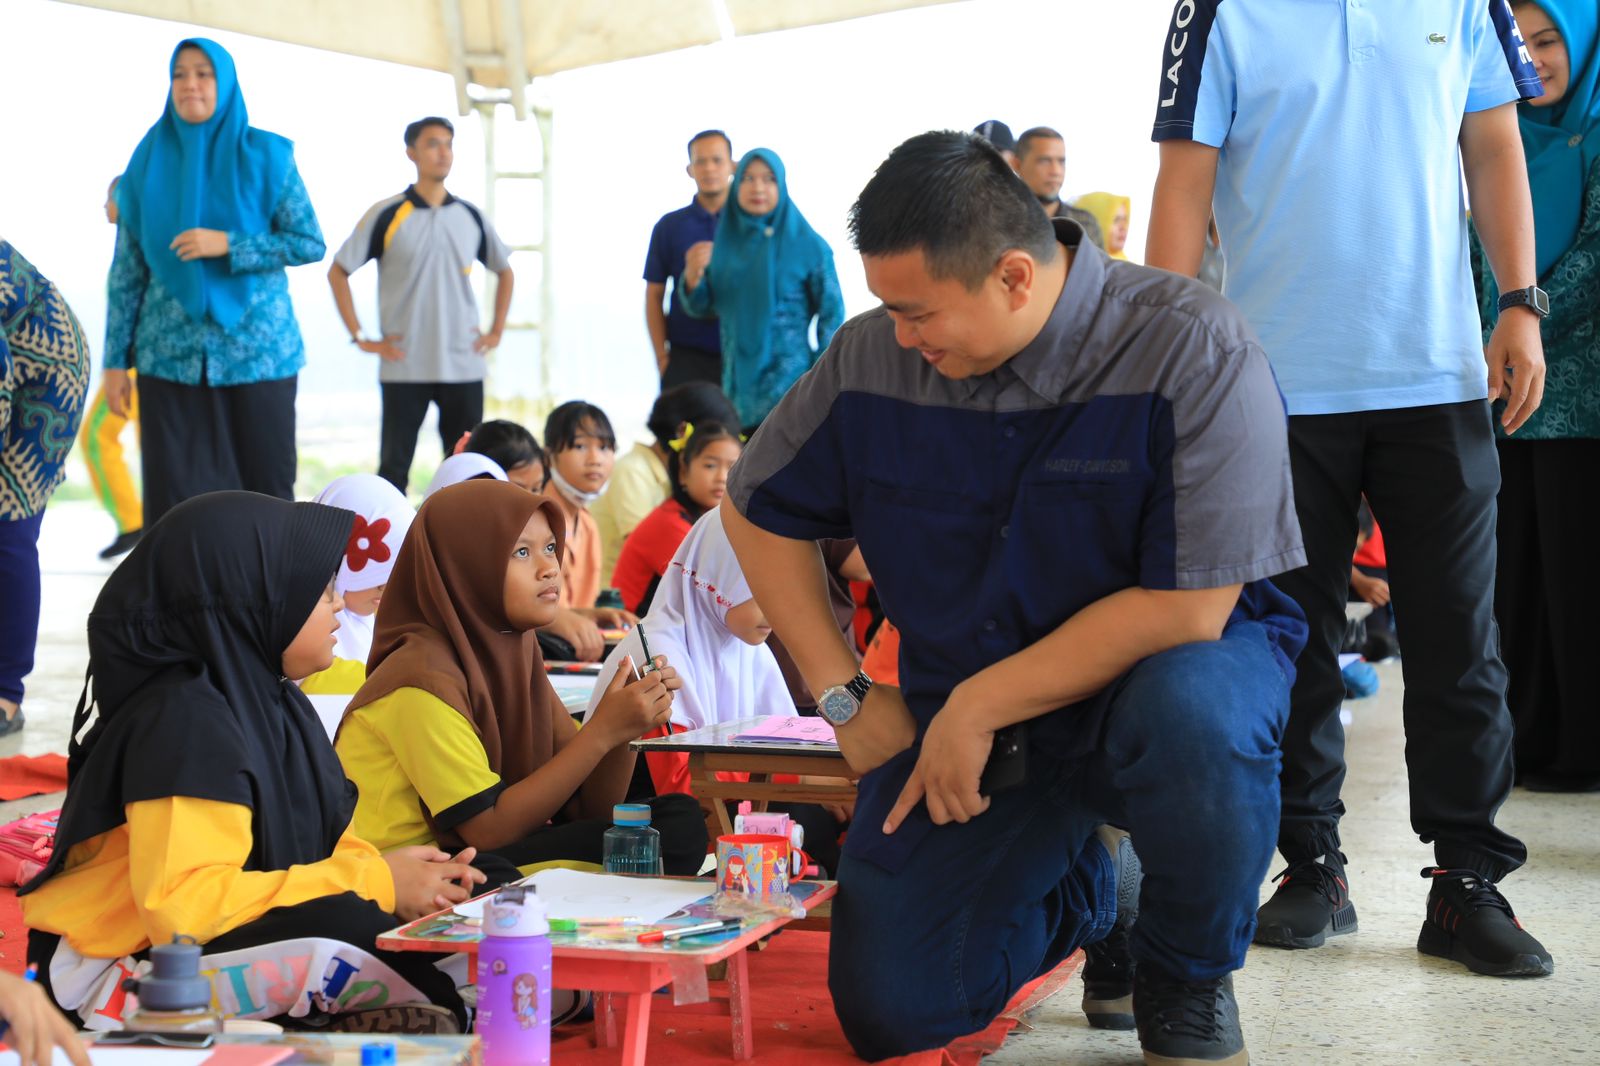 Bupati Labuhanbatu Utara Hendriyanto Sitorus saat acara gebyar sekolah sehat, Jumat (28/7).